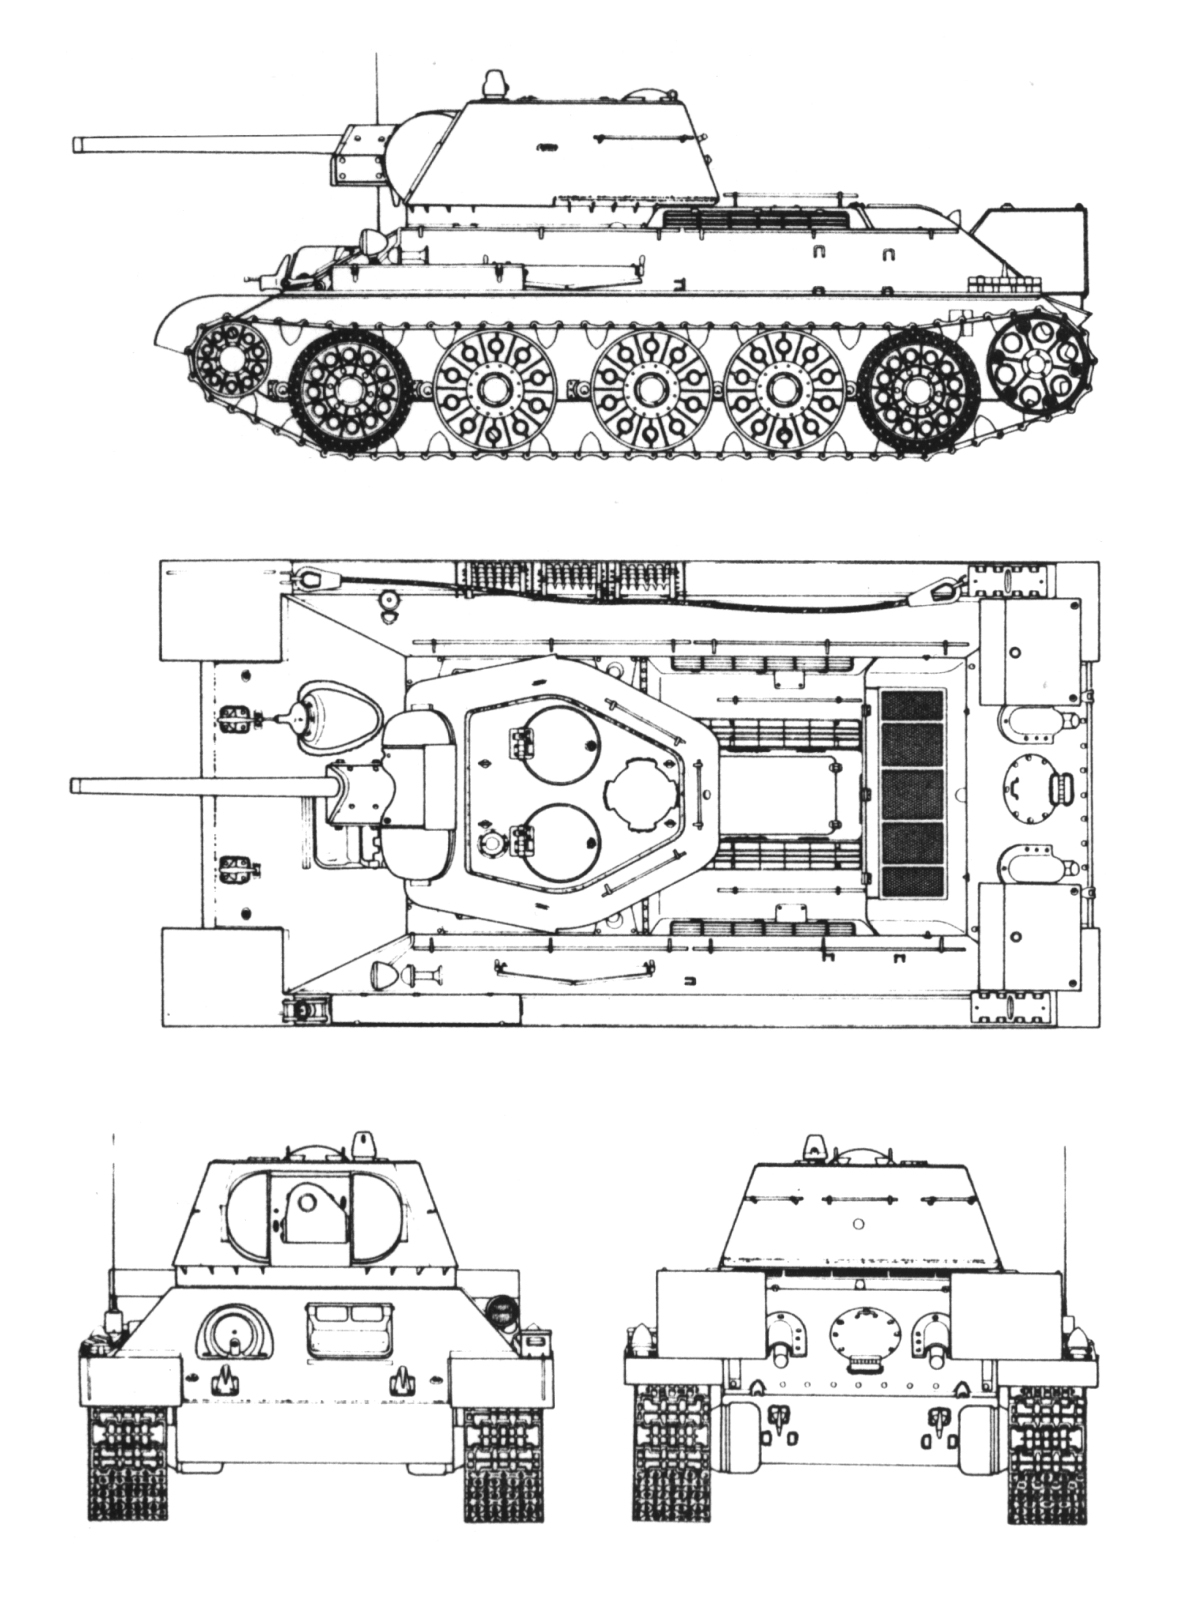 T-34-76 Model 1942/43